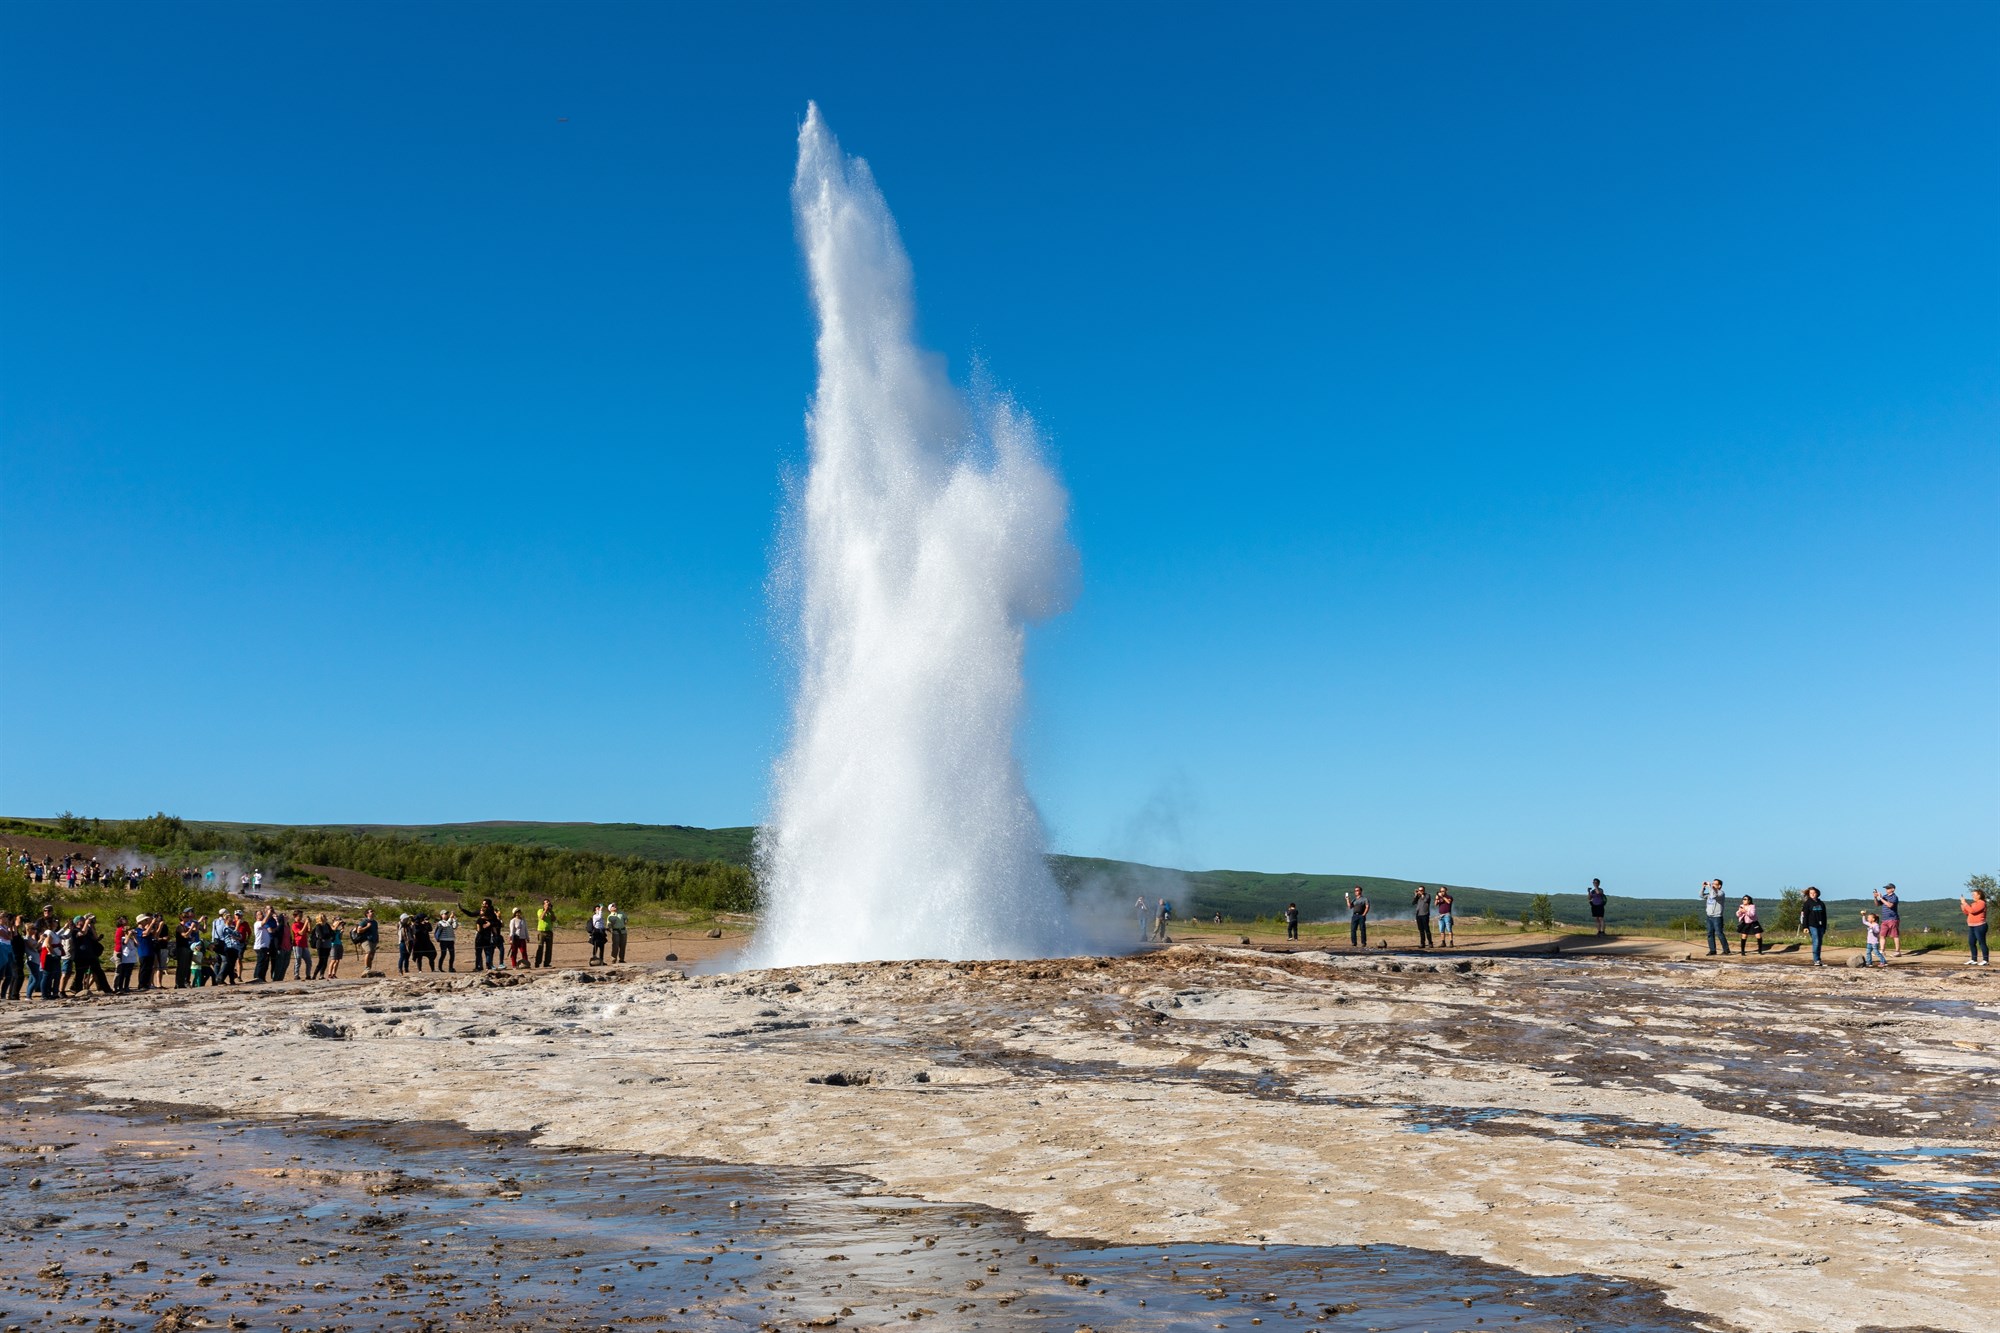 The geyser Strokkur erupting at the geyser geothermal area in Iceland.